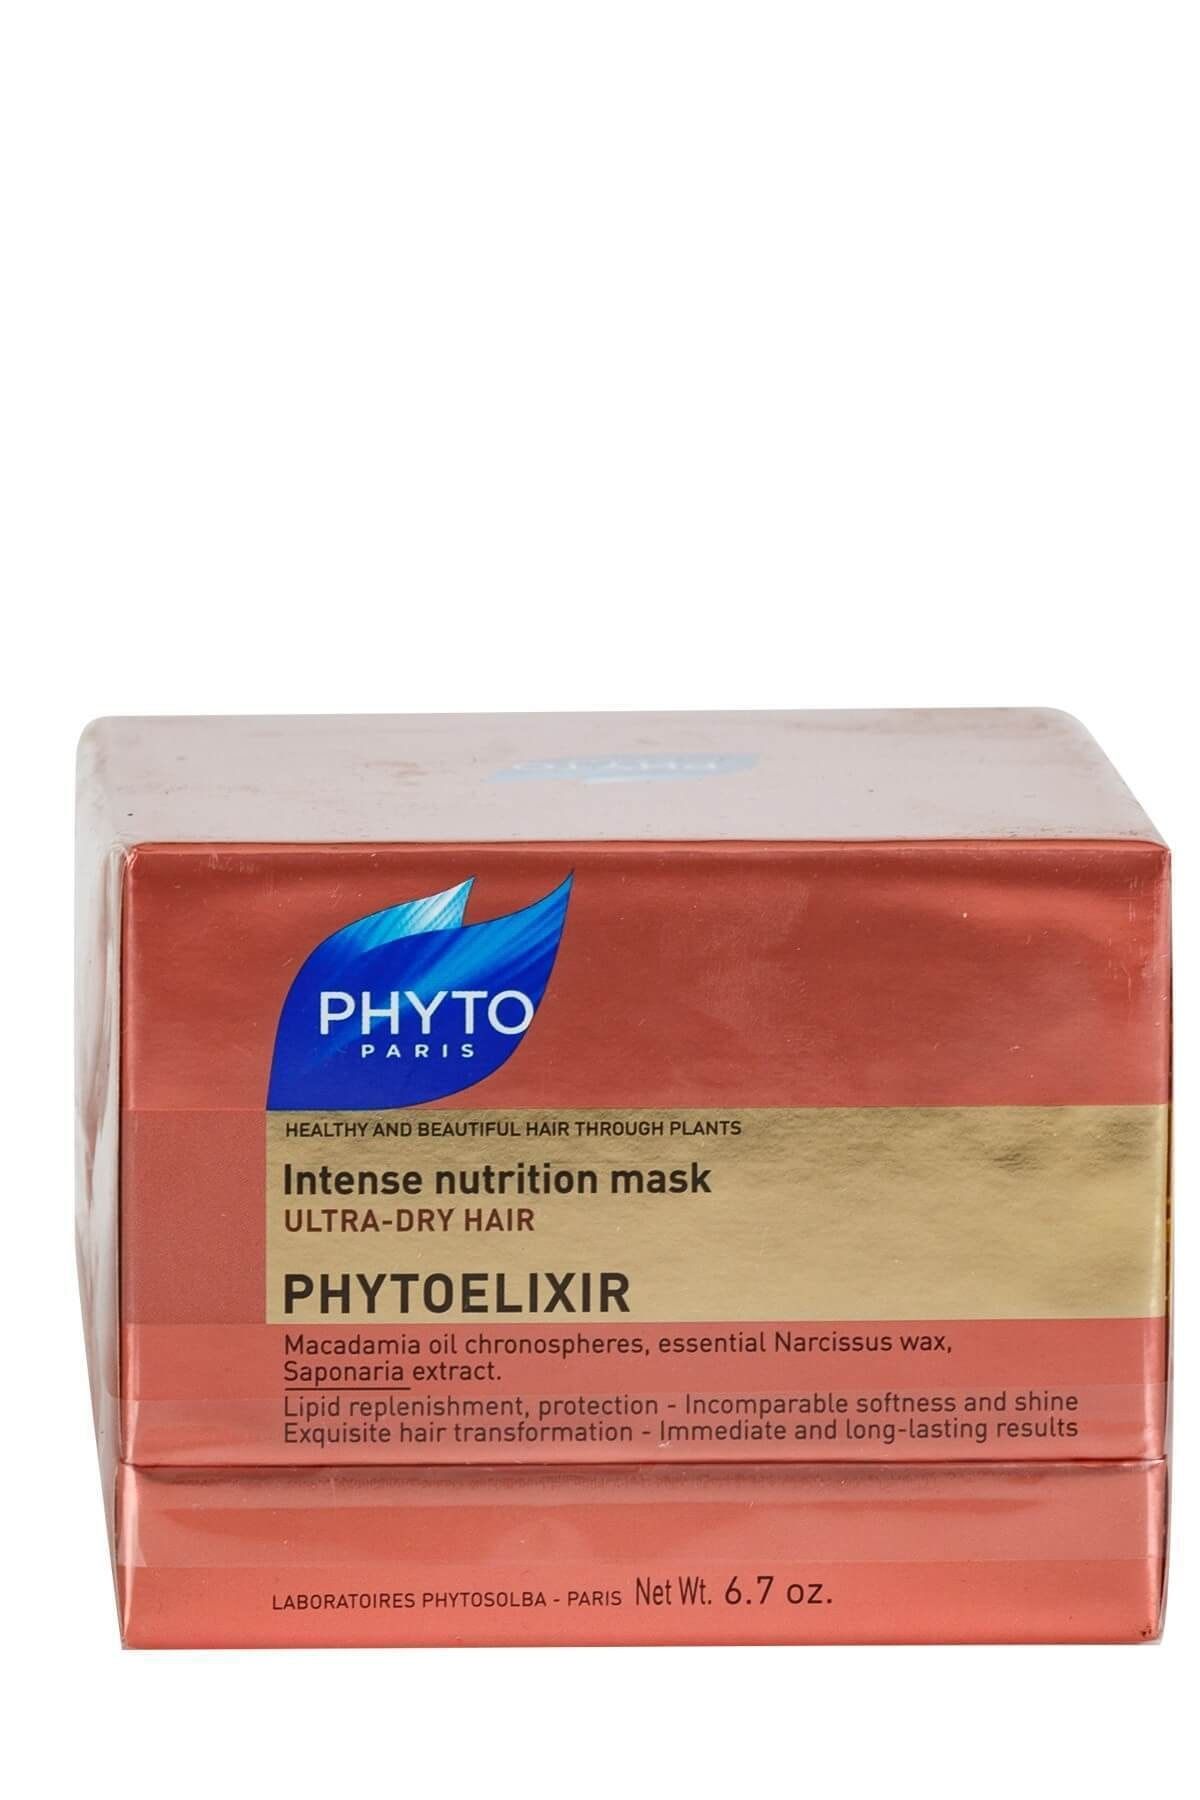 Phyto ماسک تغذیه عمیق الیکسیر 200 میلی لیتر